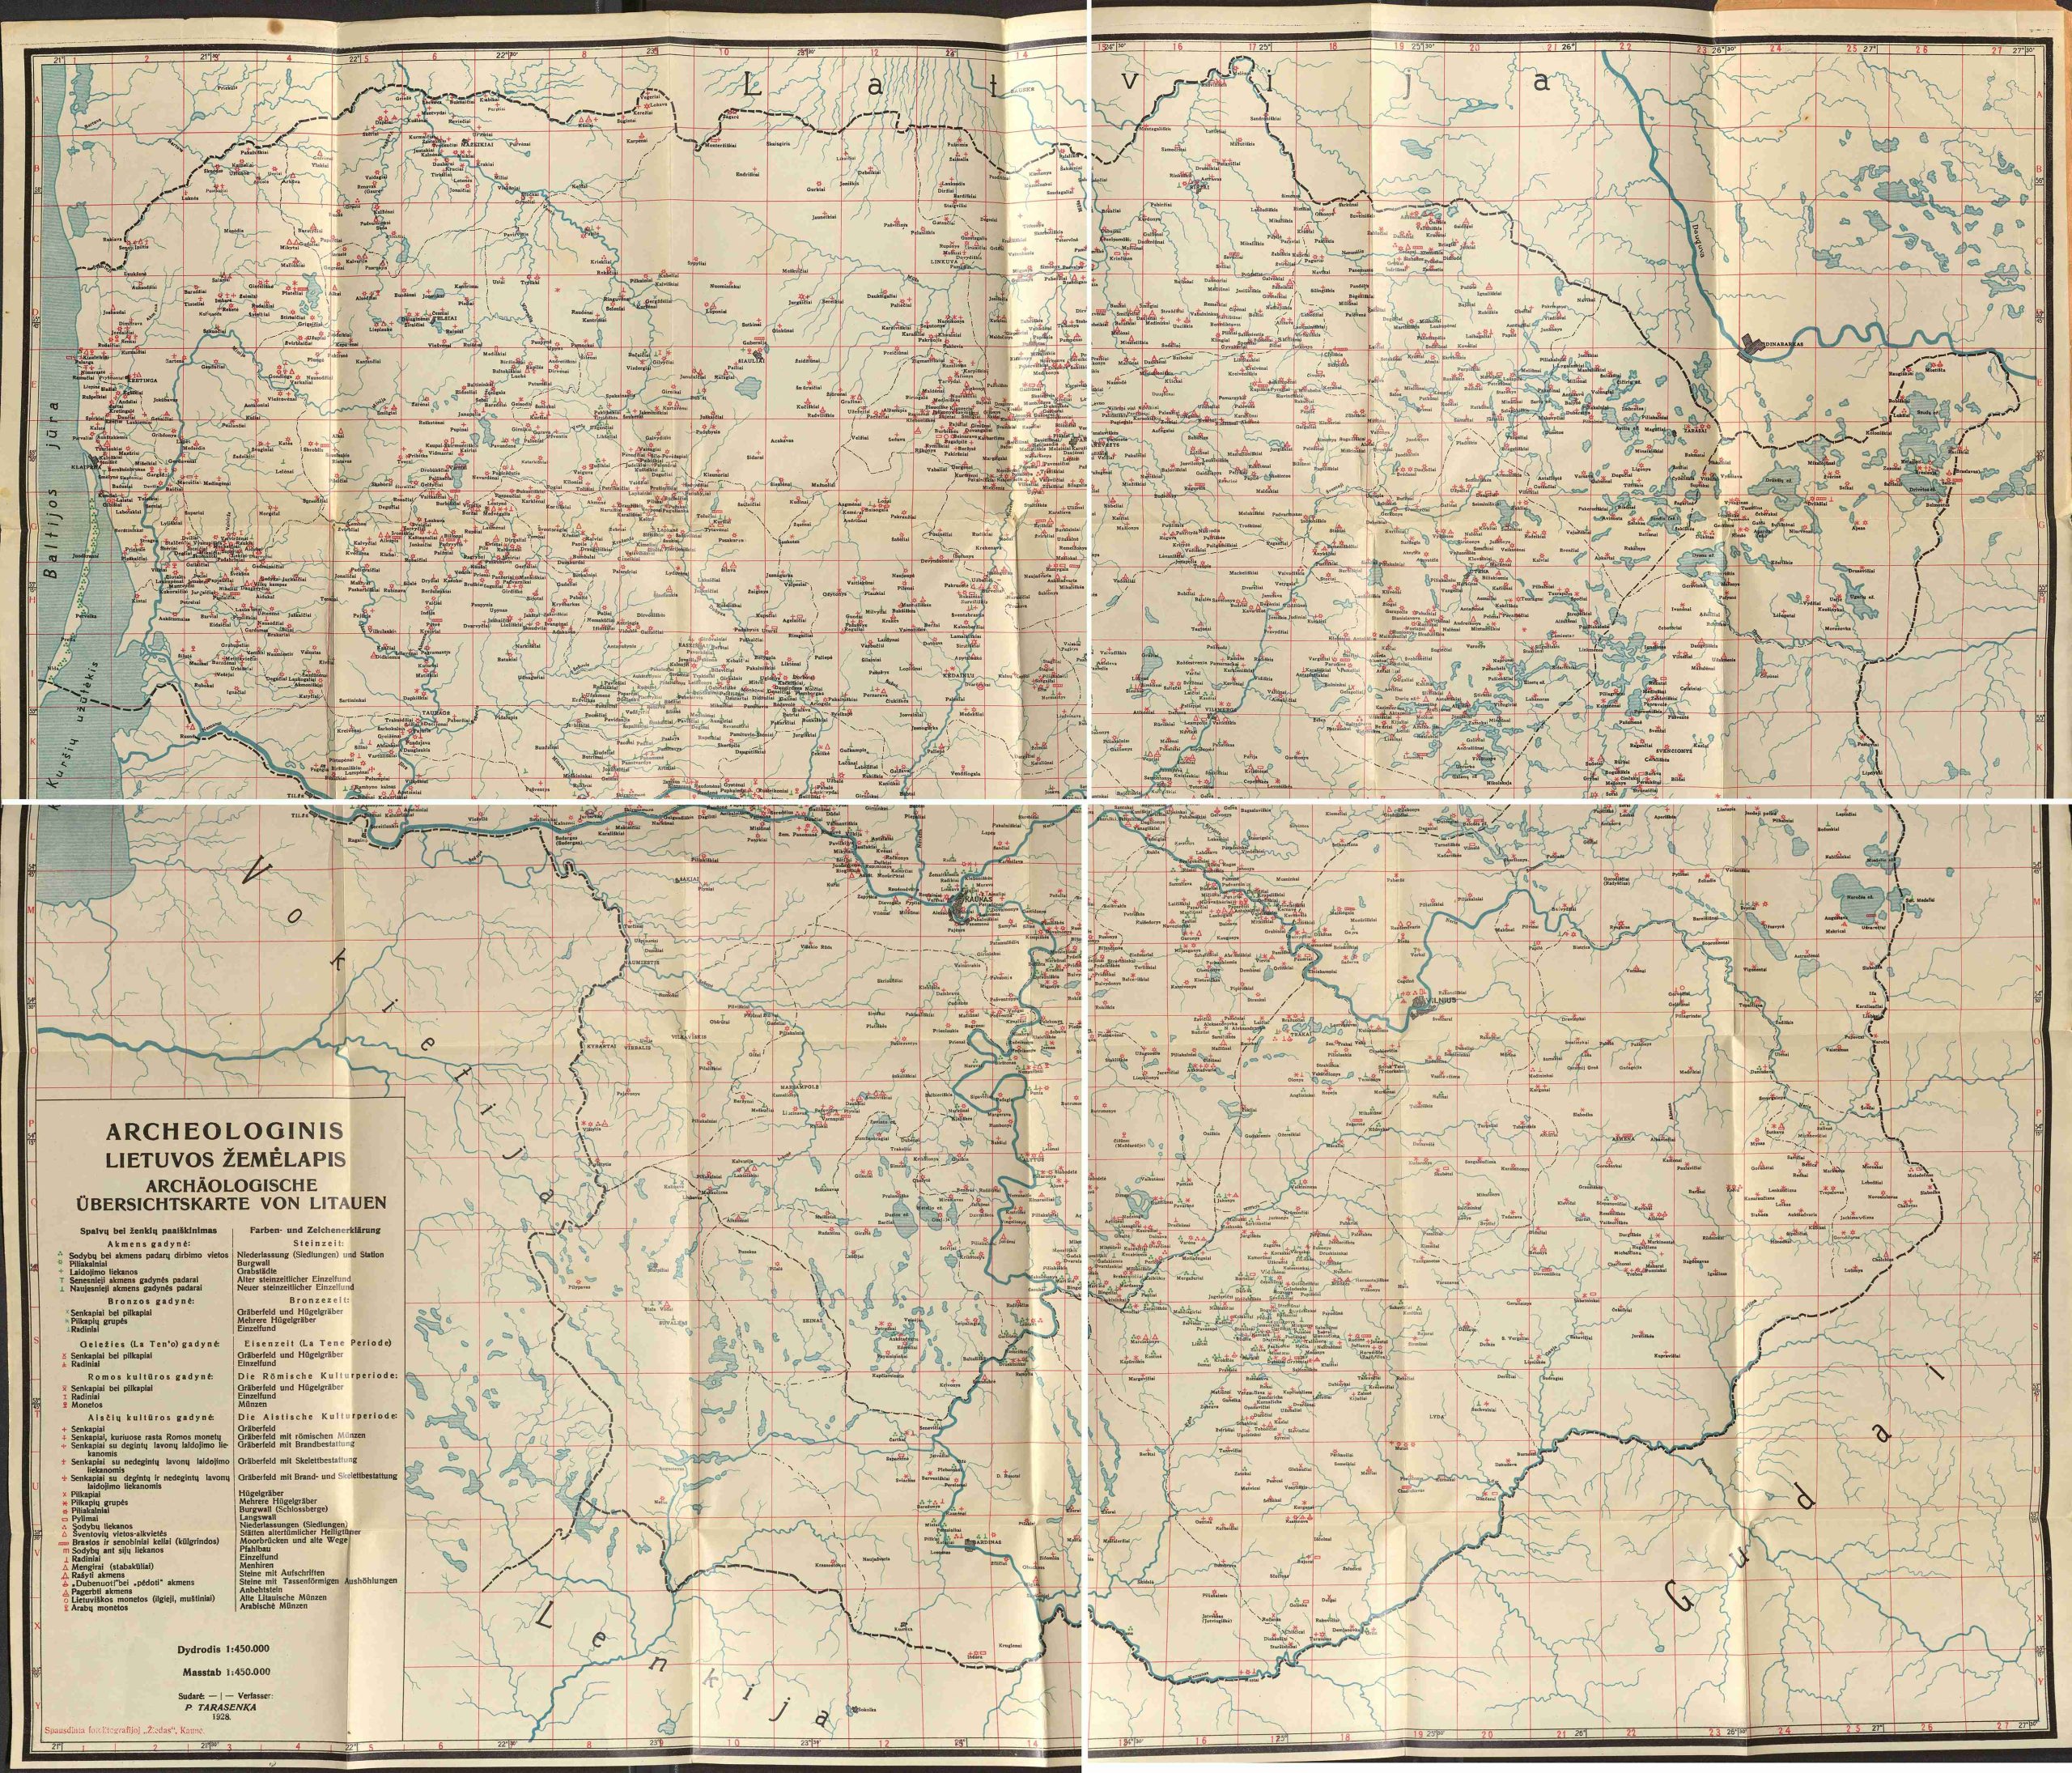 P. Tarasenka. Archeologinis Lietuvos žemėlapis. K., 1928 m. MLLM P 19463